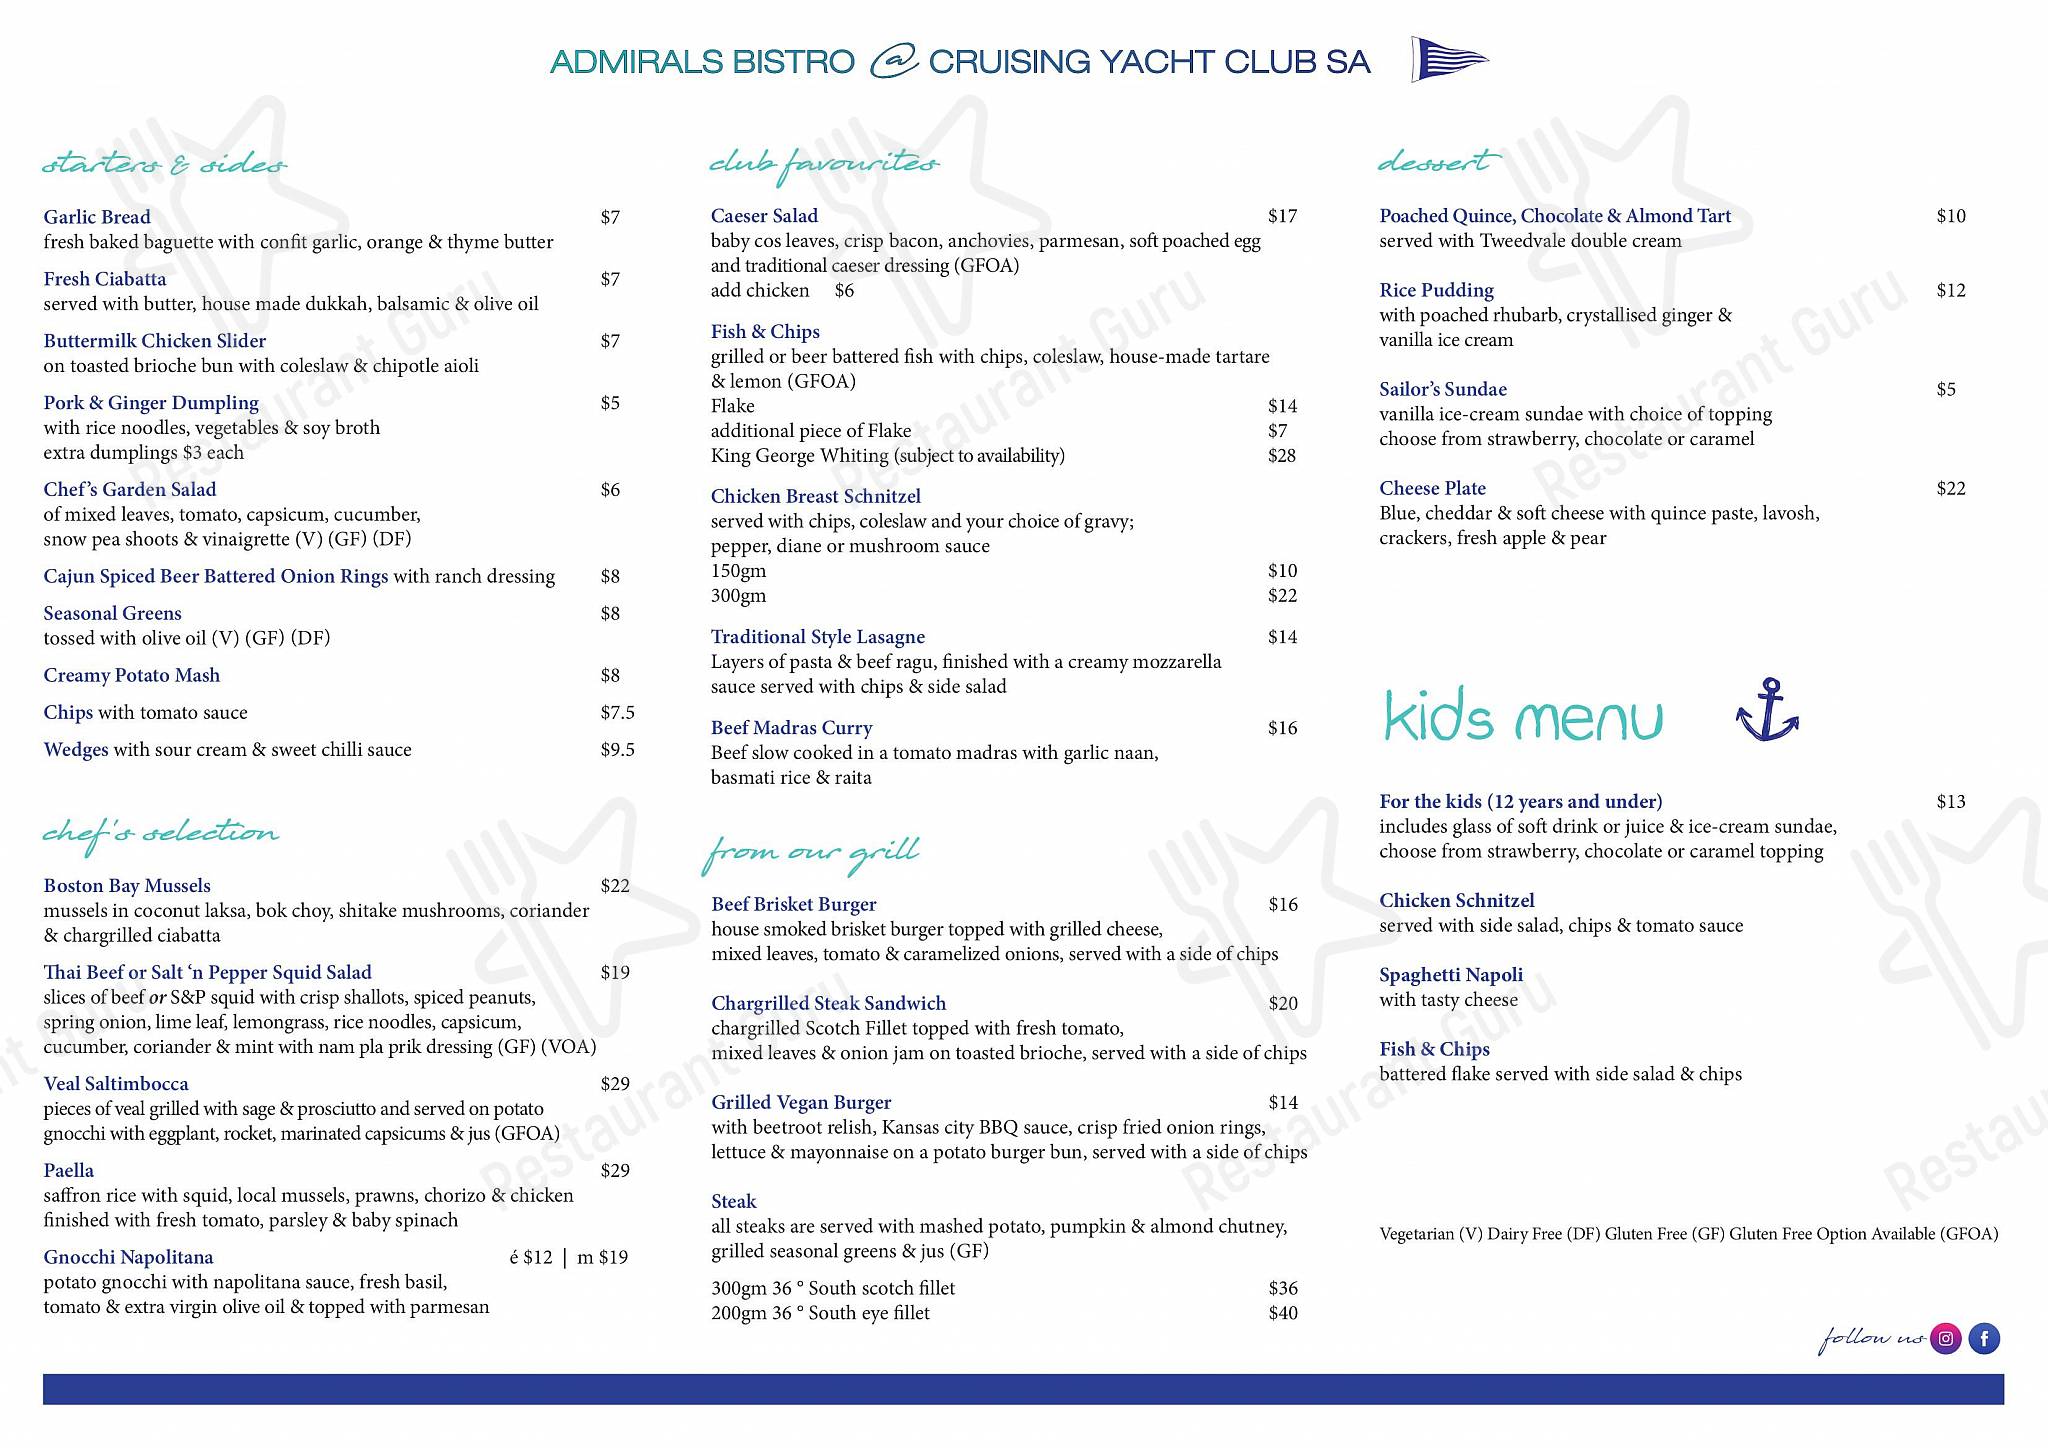 cruising yacht club of south australia menu